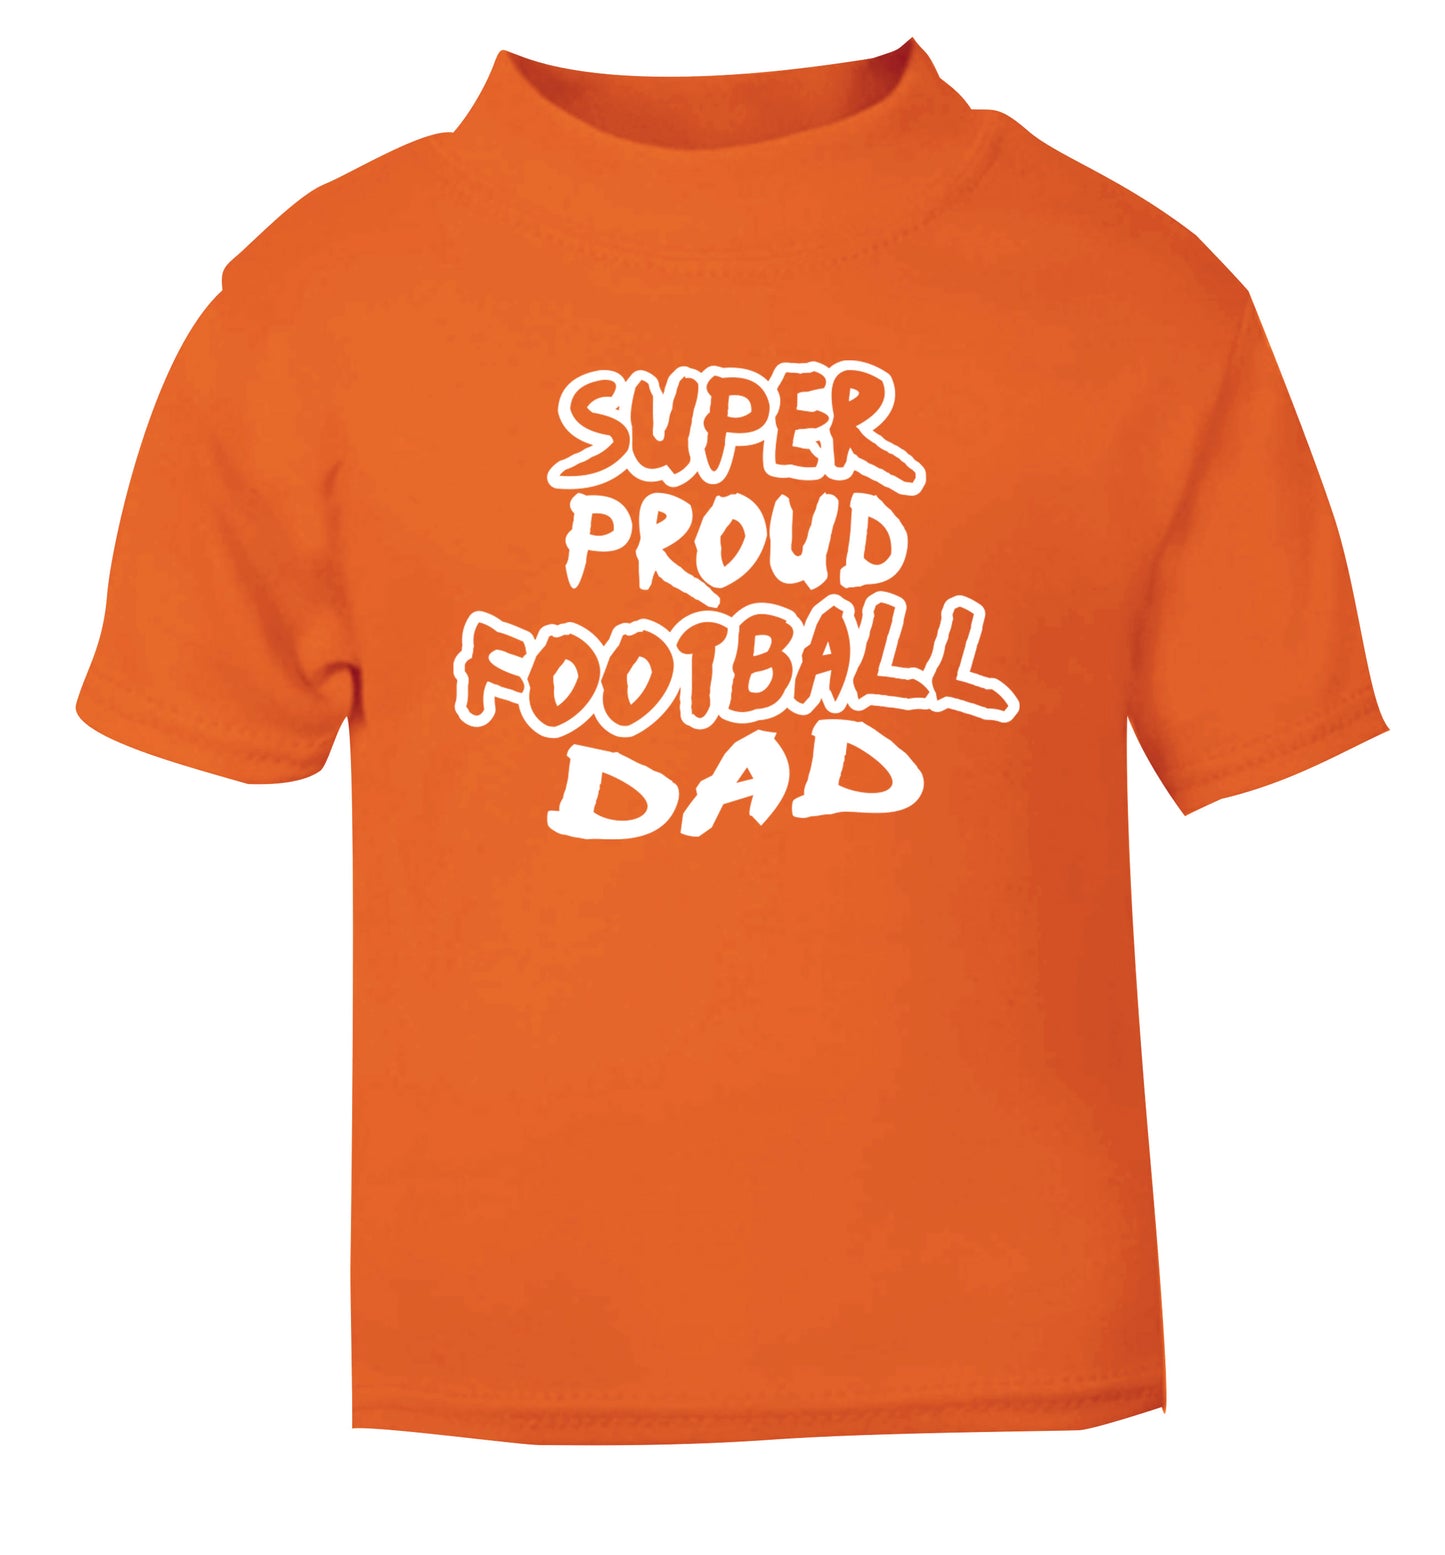 Super proud football dad orange Baby Toddler Tshirt 2 Years